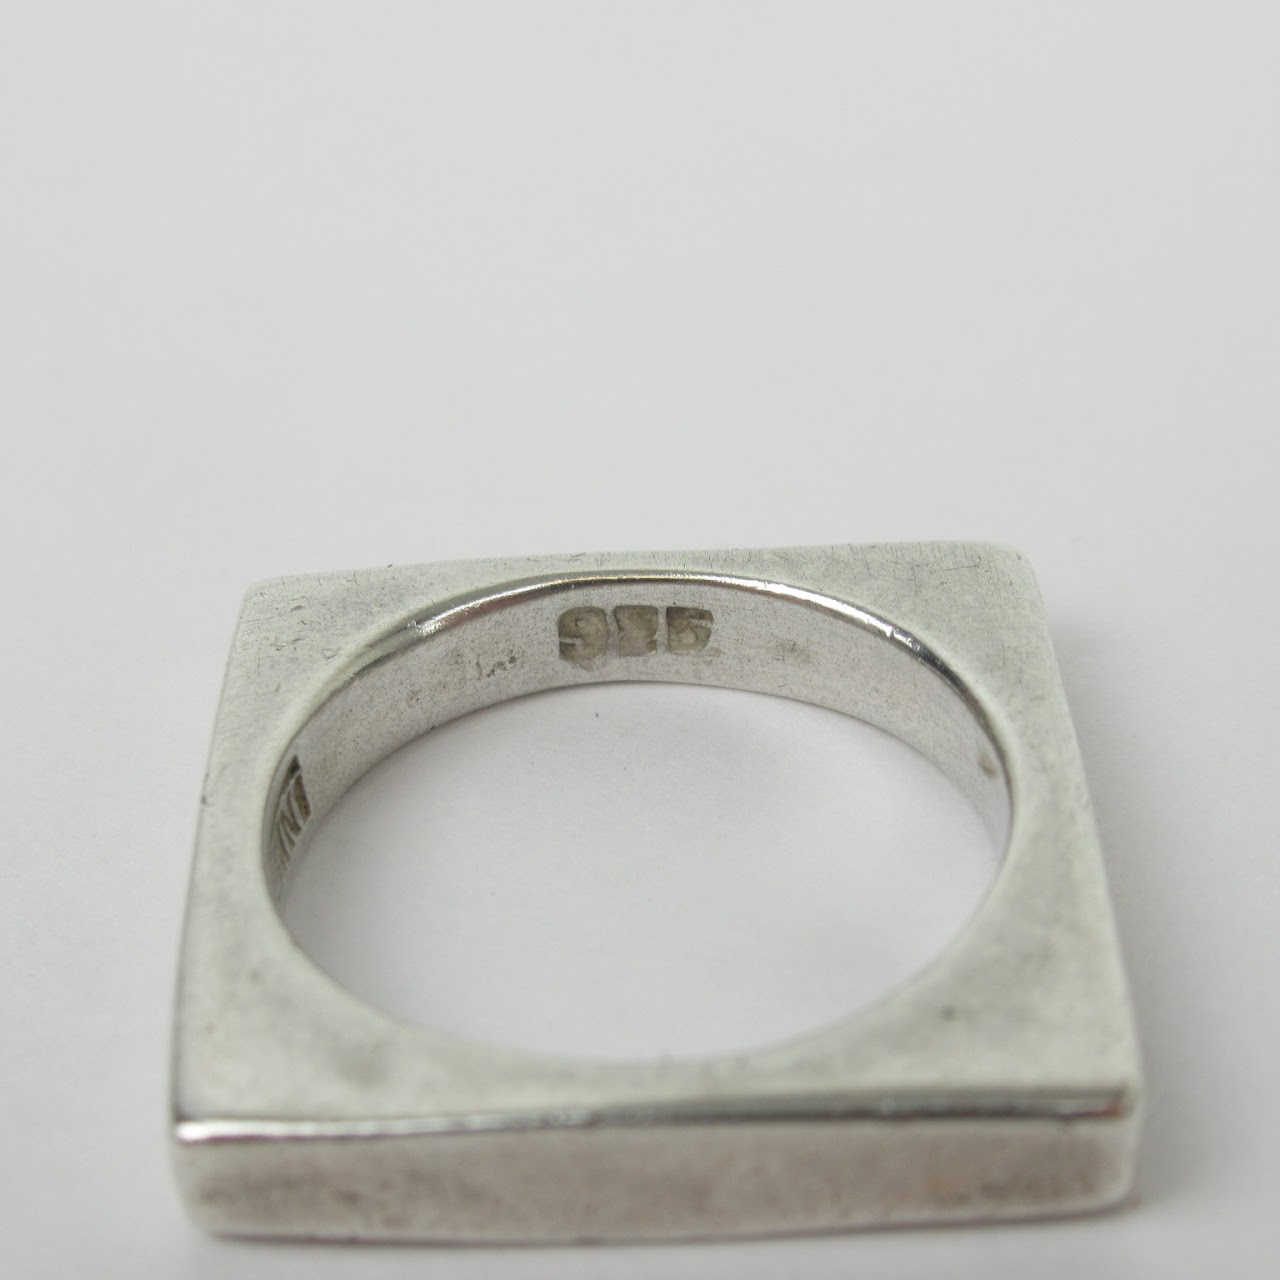 Sterling Modernist Versani Ring